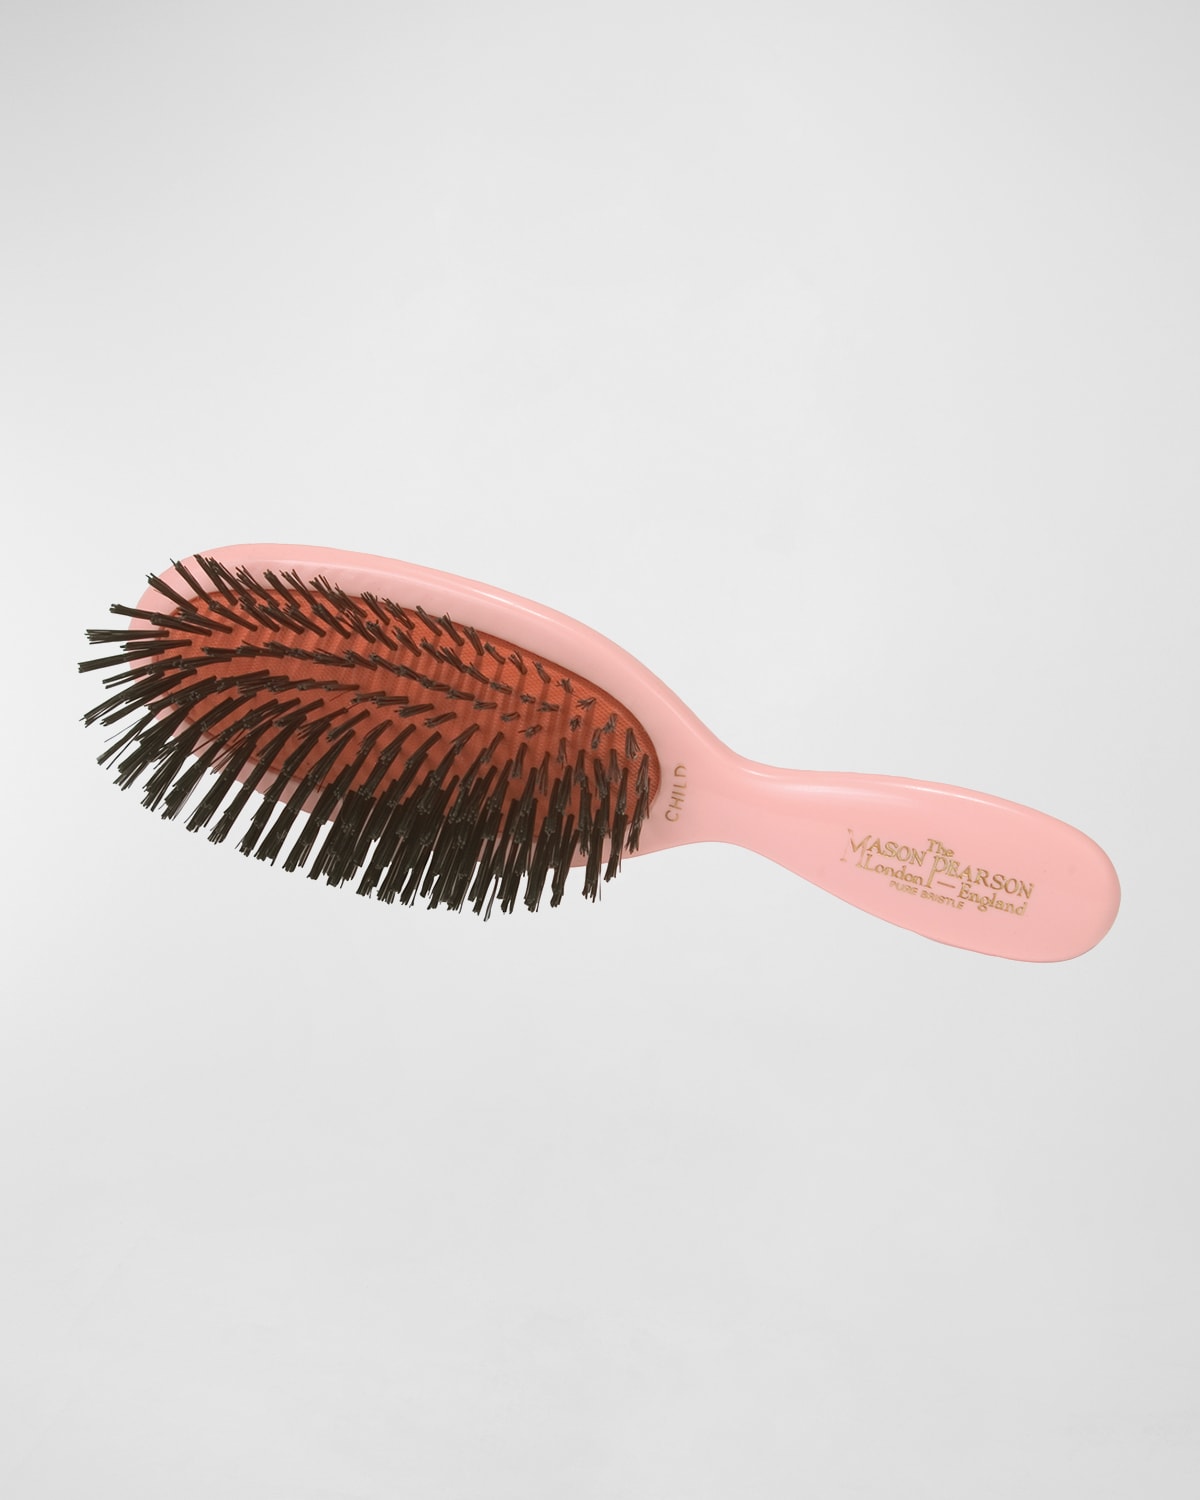 Mason Pearson Childs Pink Bristle Hair Brush